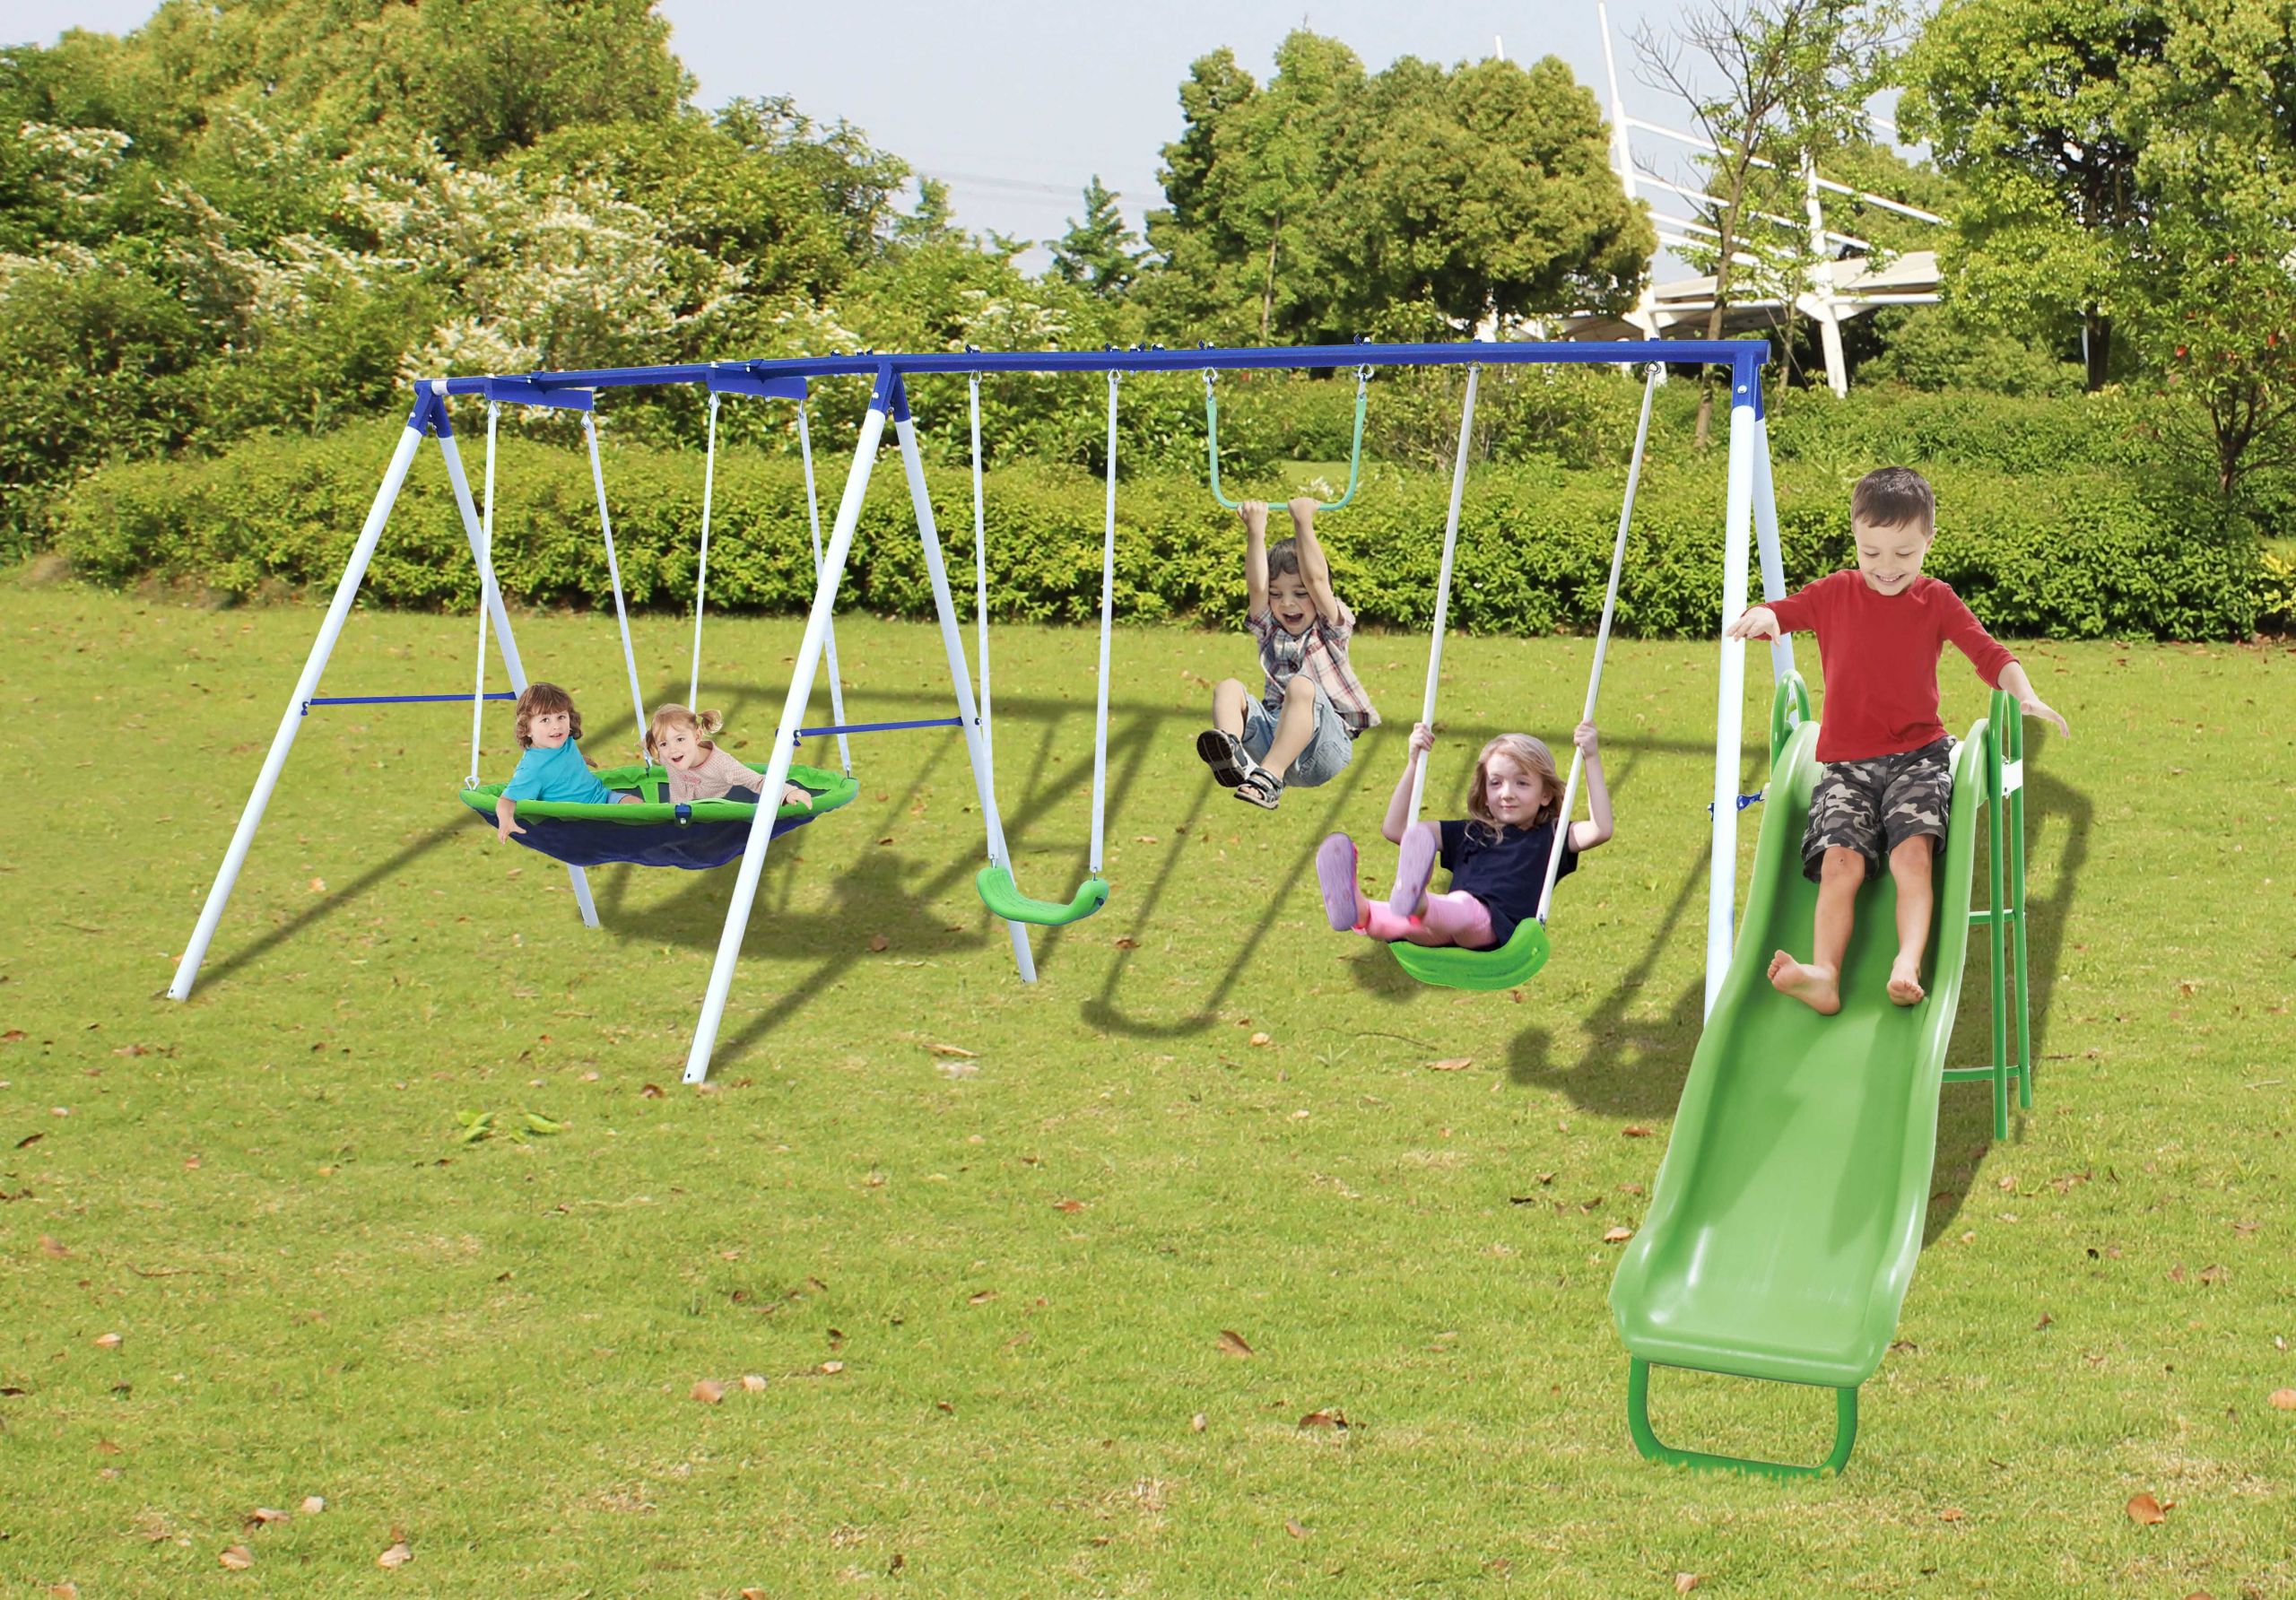 Kmart Kids Swing Set
 Sportspower Outdoor Play set with Saucer Swing